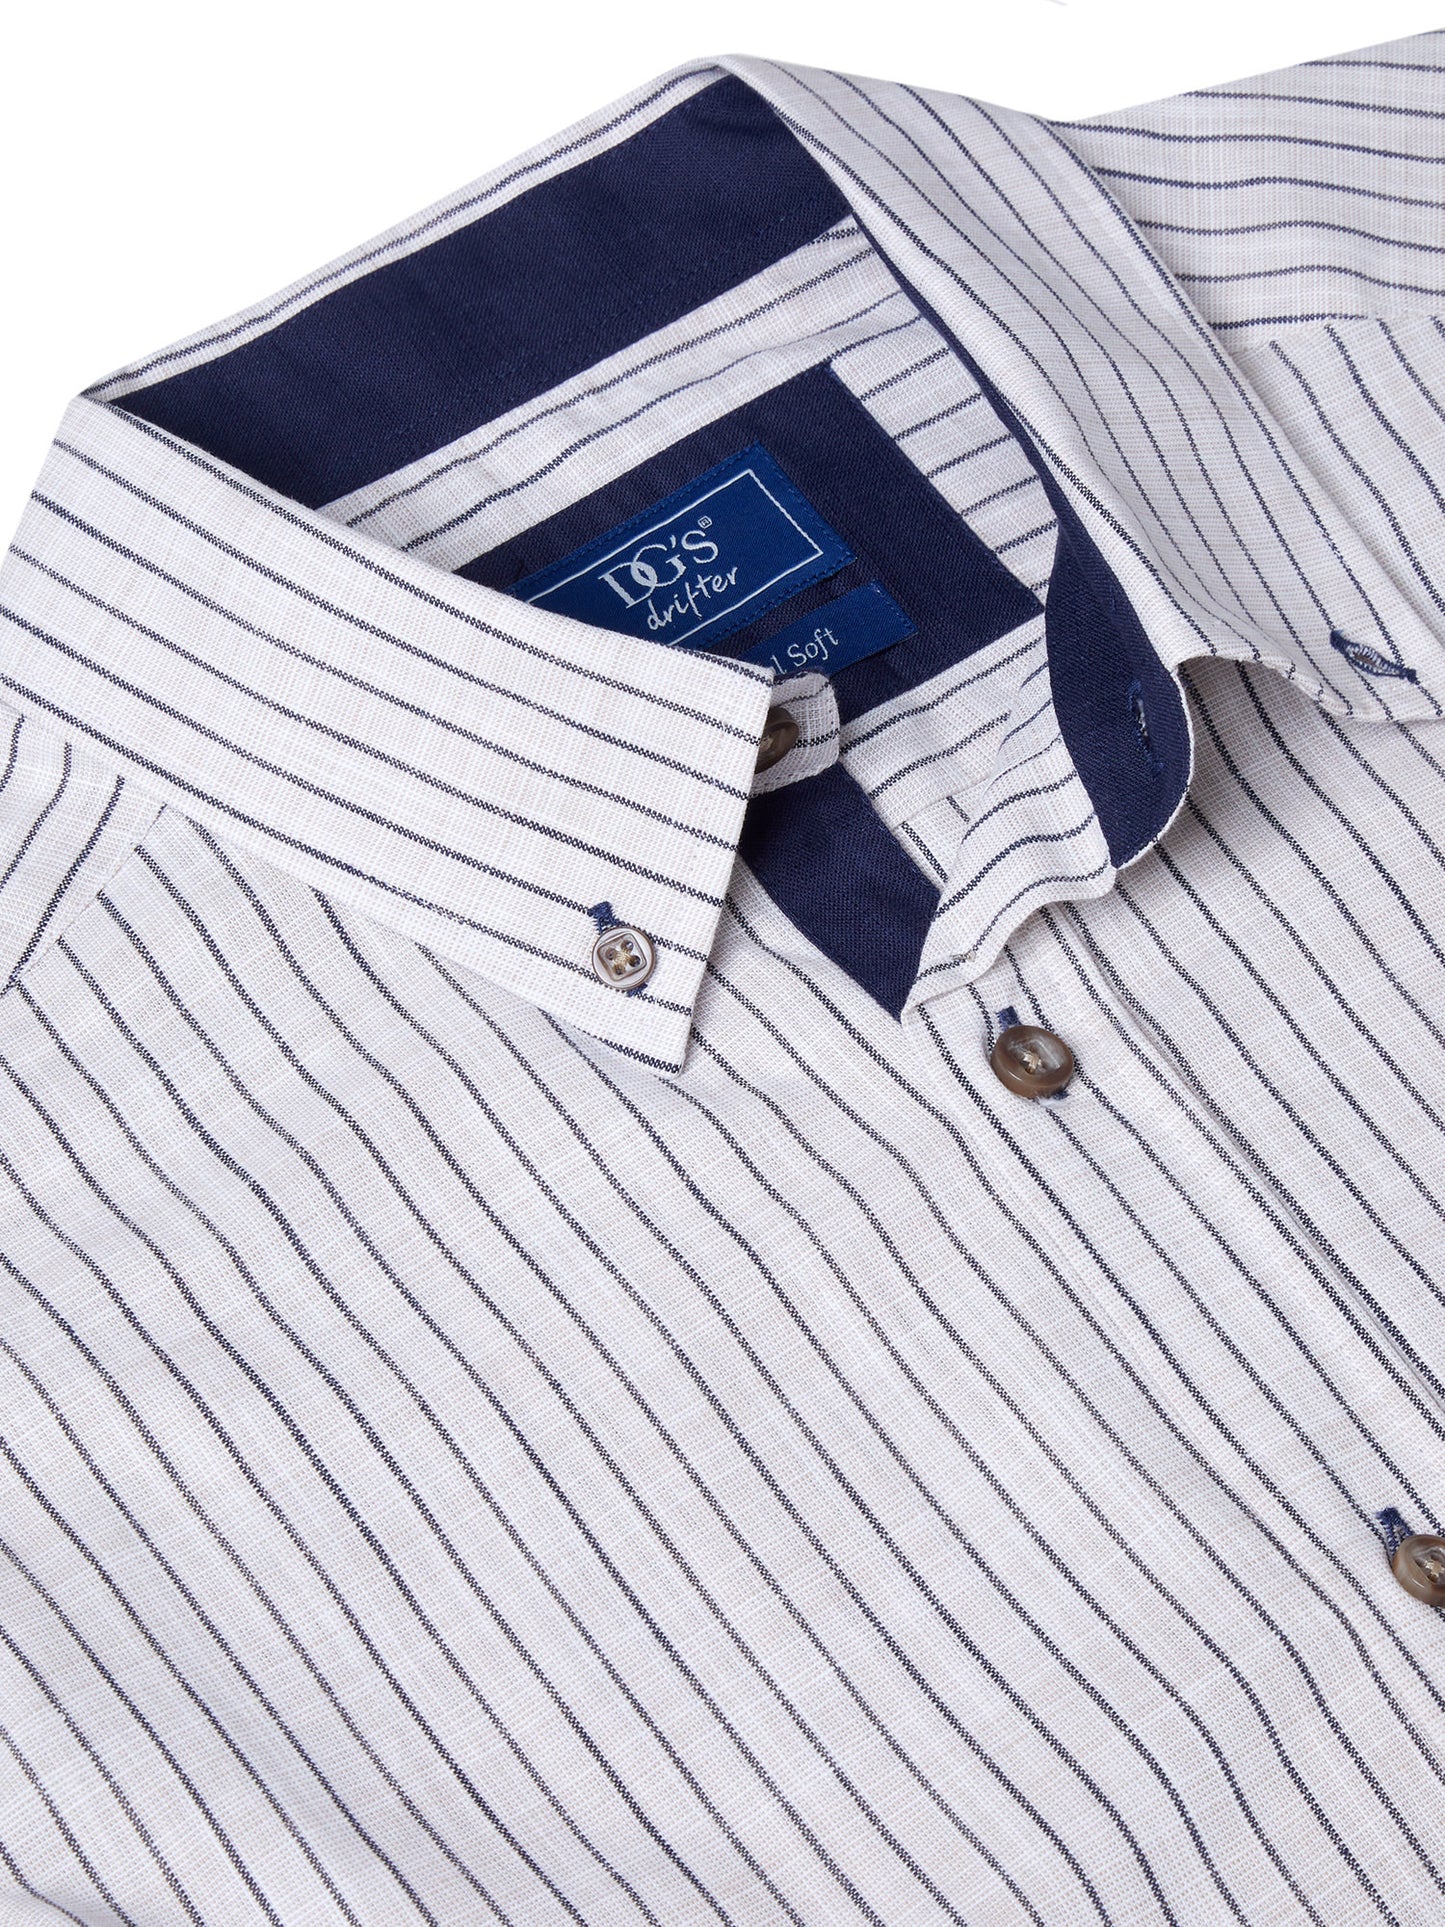 Pure Cotton Button-Down Short-Sleeve Shirt - Stone Stripe